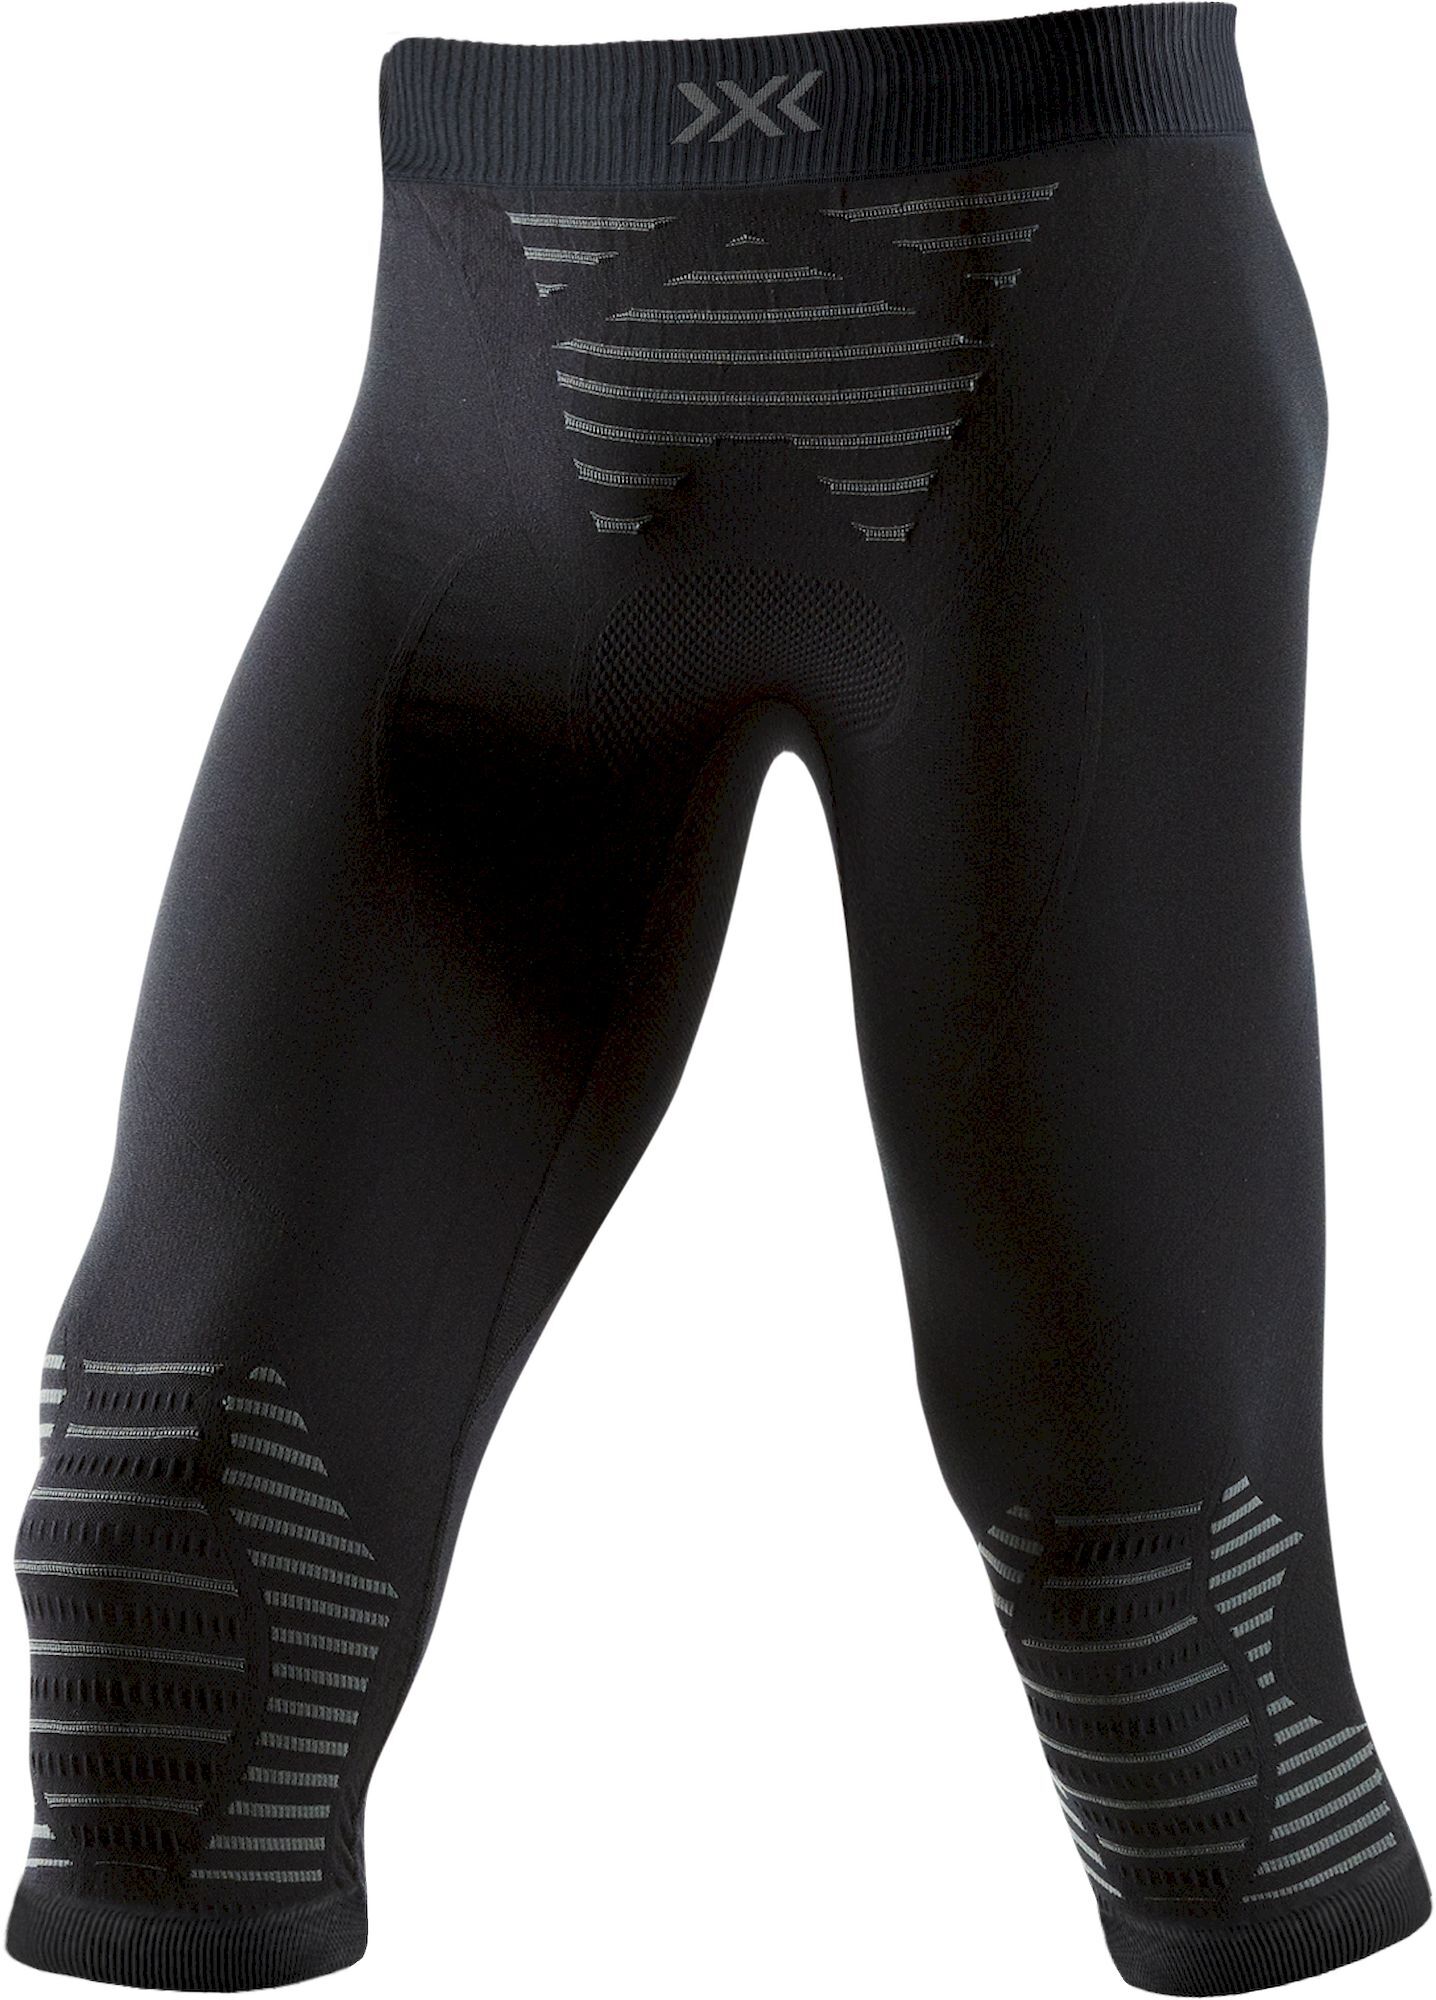 X-Bionic Invent 4.0 Pants 3/4 - Leggings - Men's